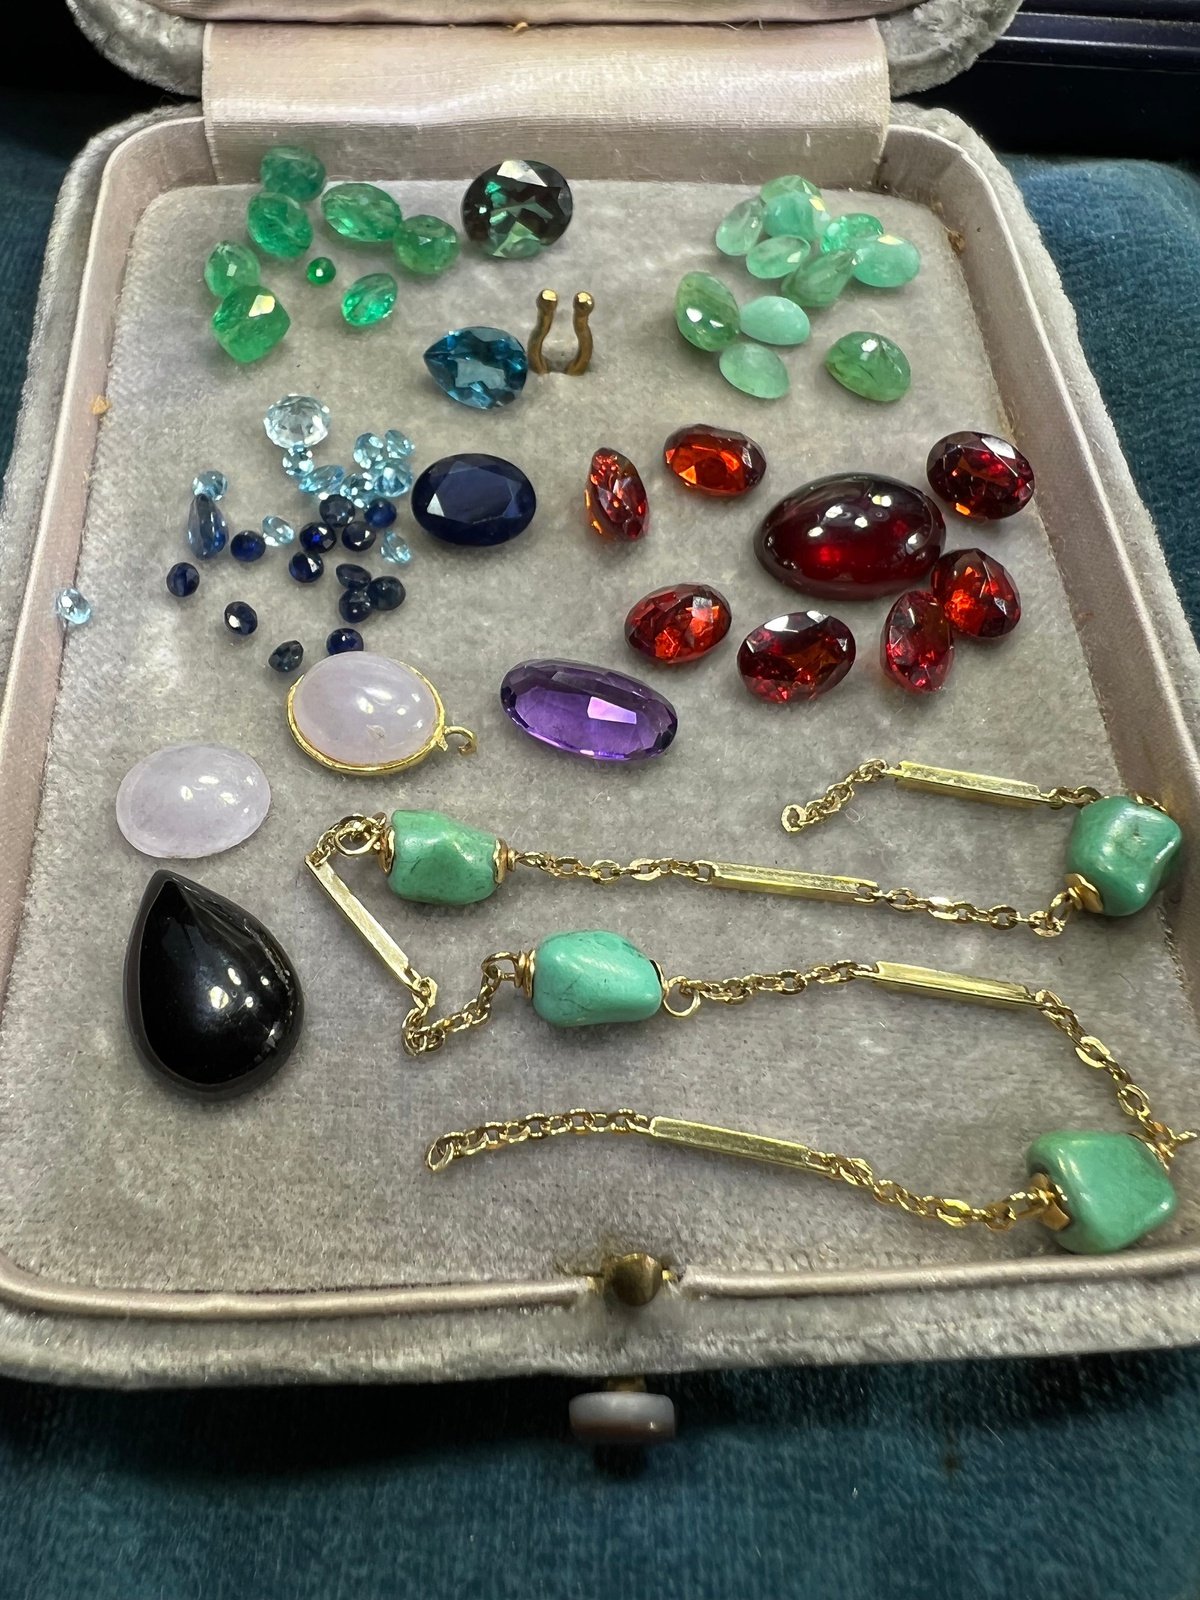 14g Loose Gemstones from 14k Jewelry. Sapphire Emerald Tourmaline